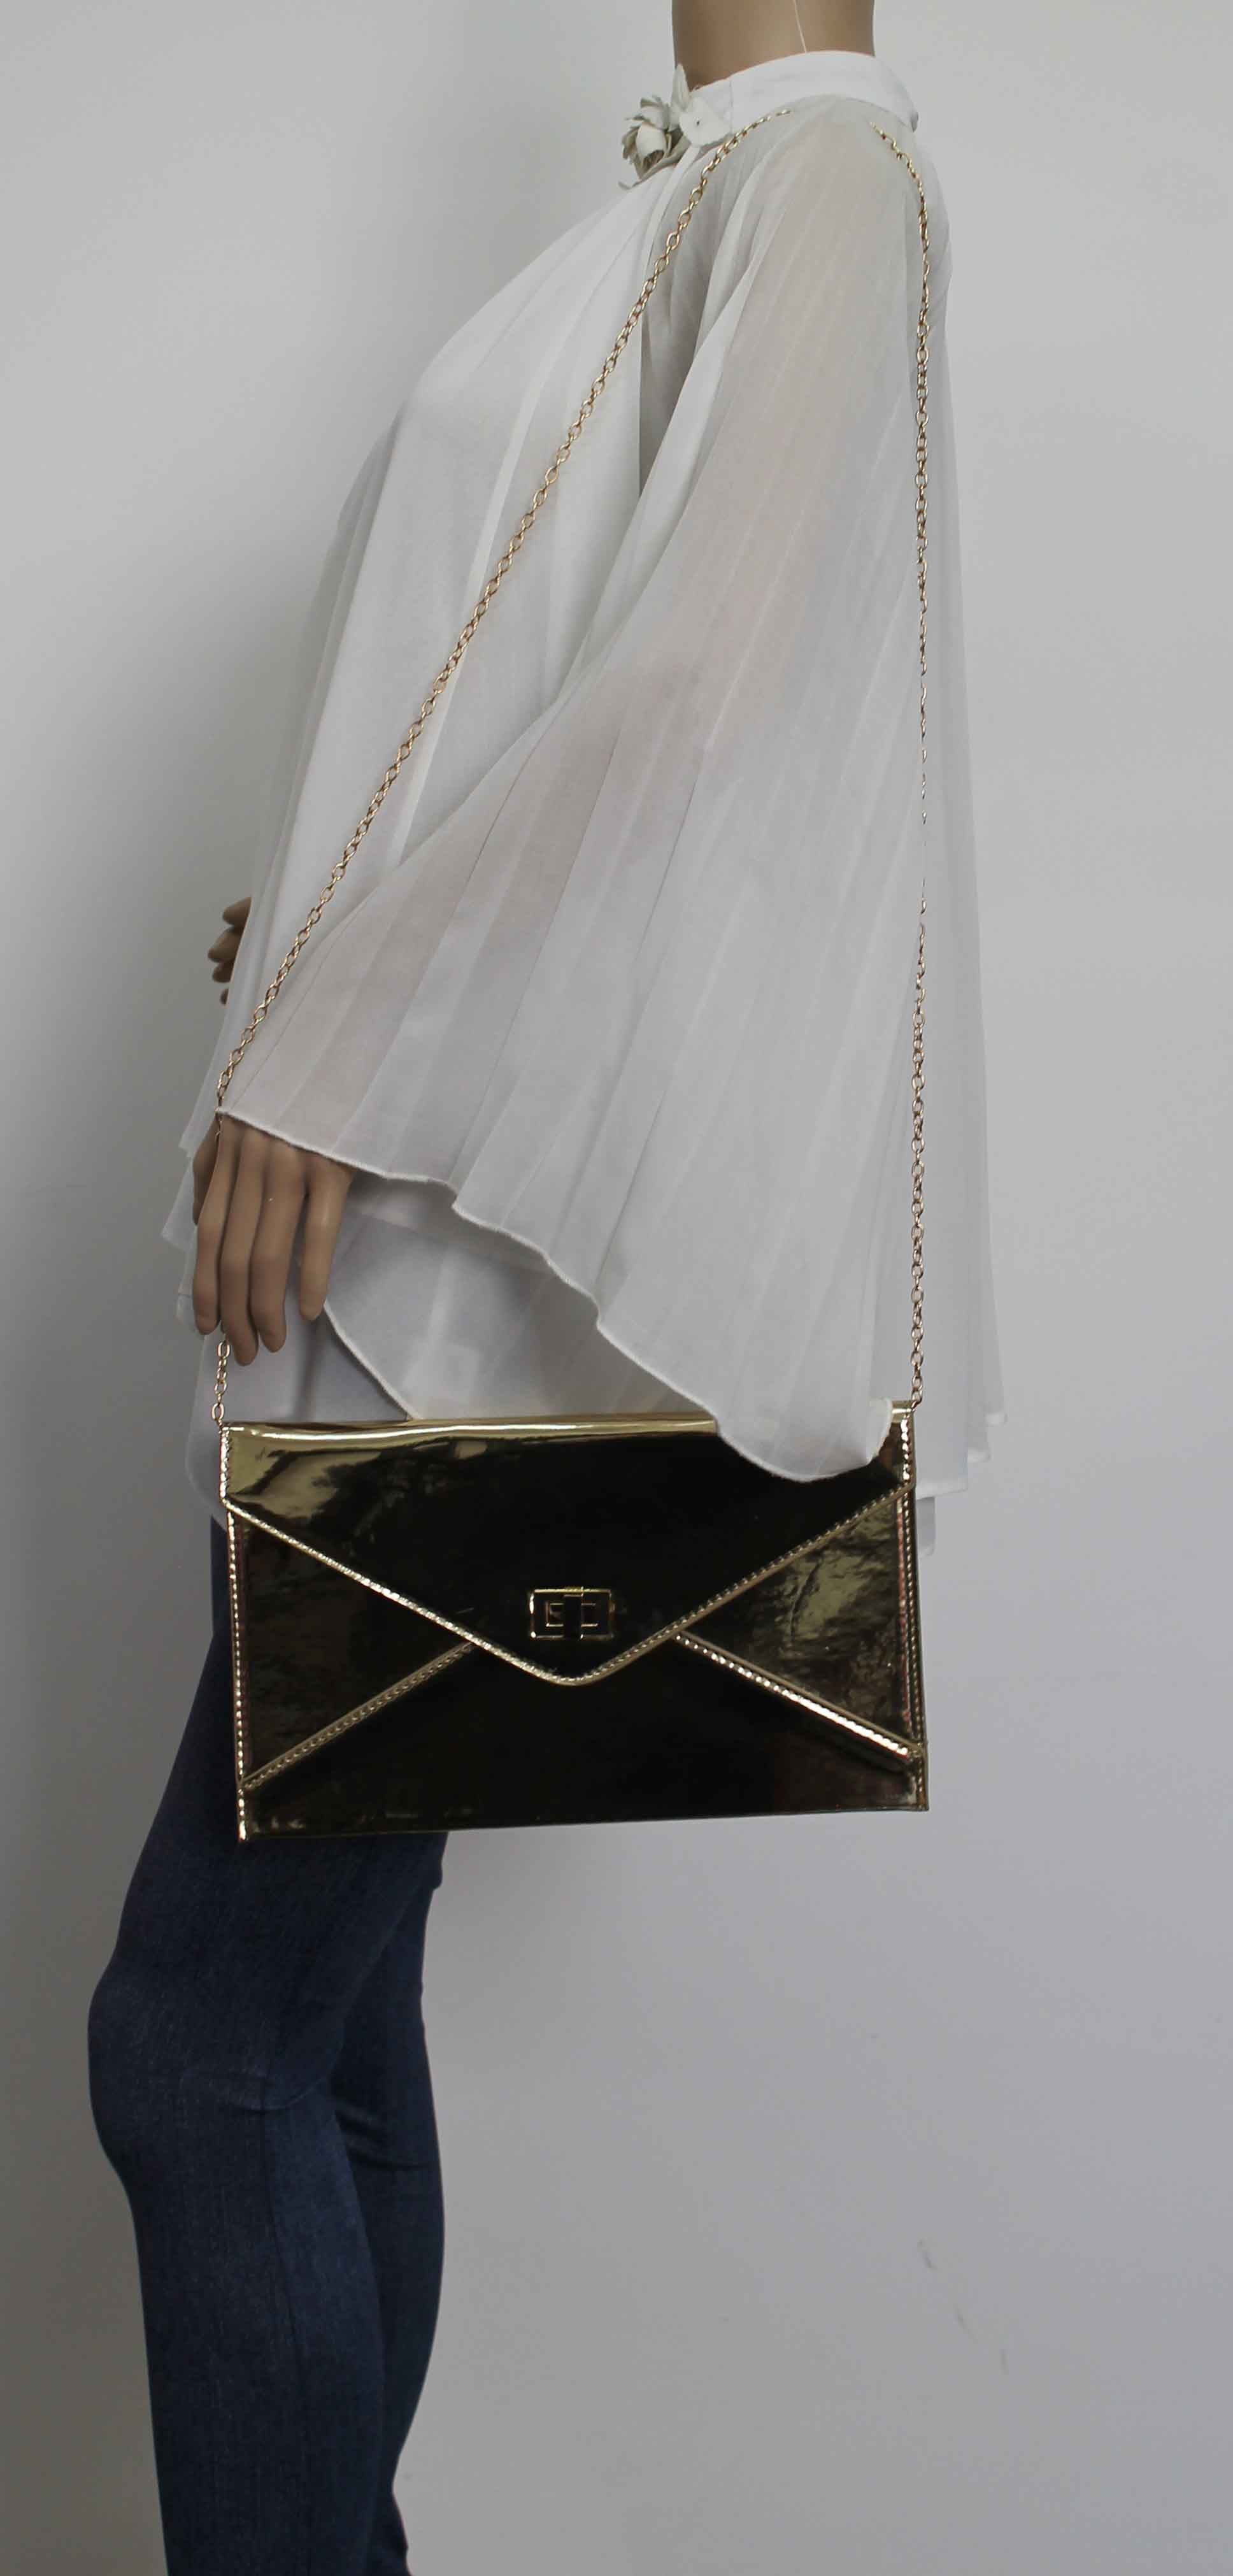 SWANKYSWANS Sarah Envelope Clutch Bag Gold Cute Cheap Clutch Bag For Weddings School and Work